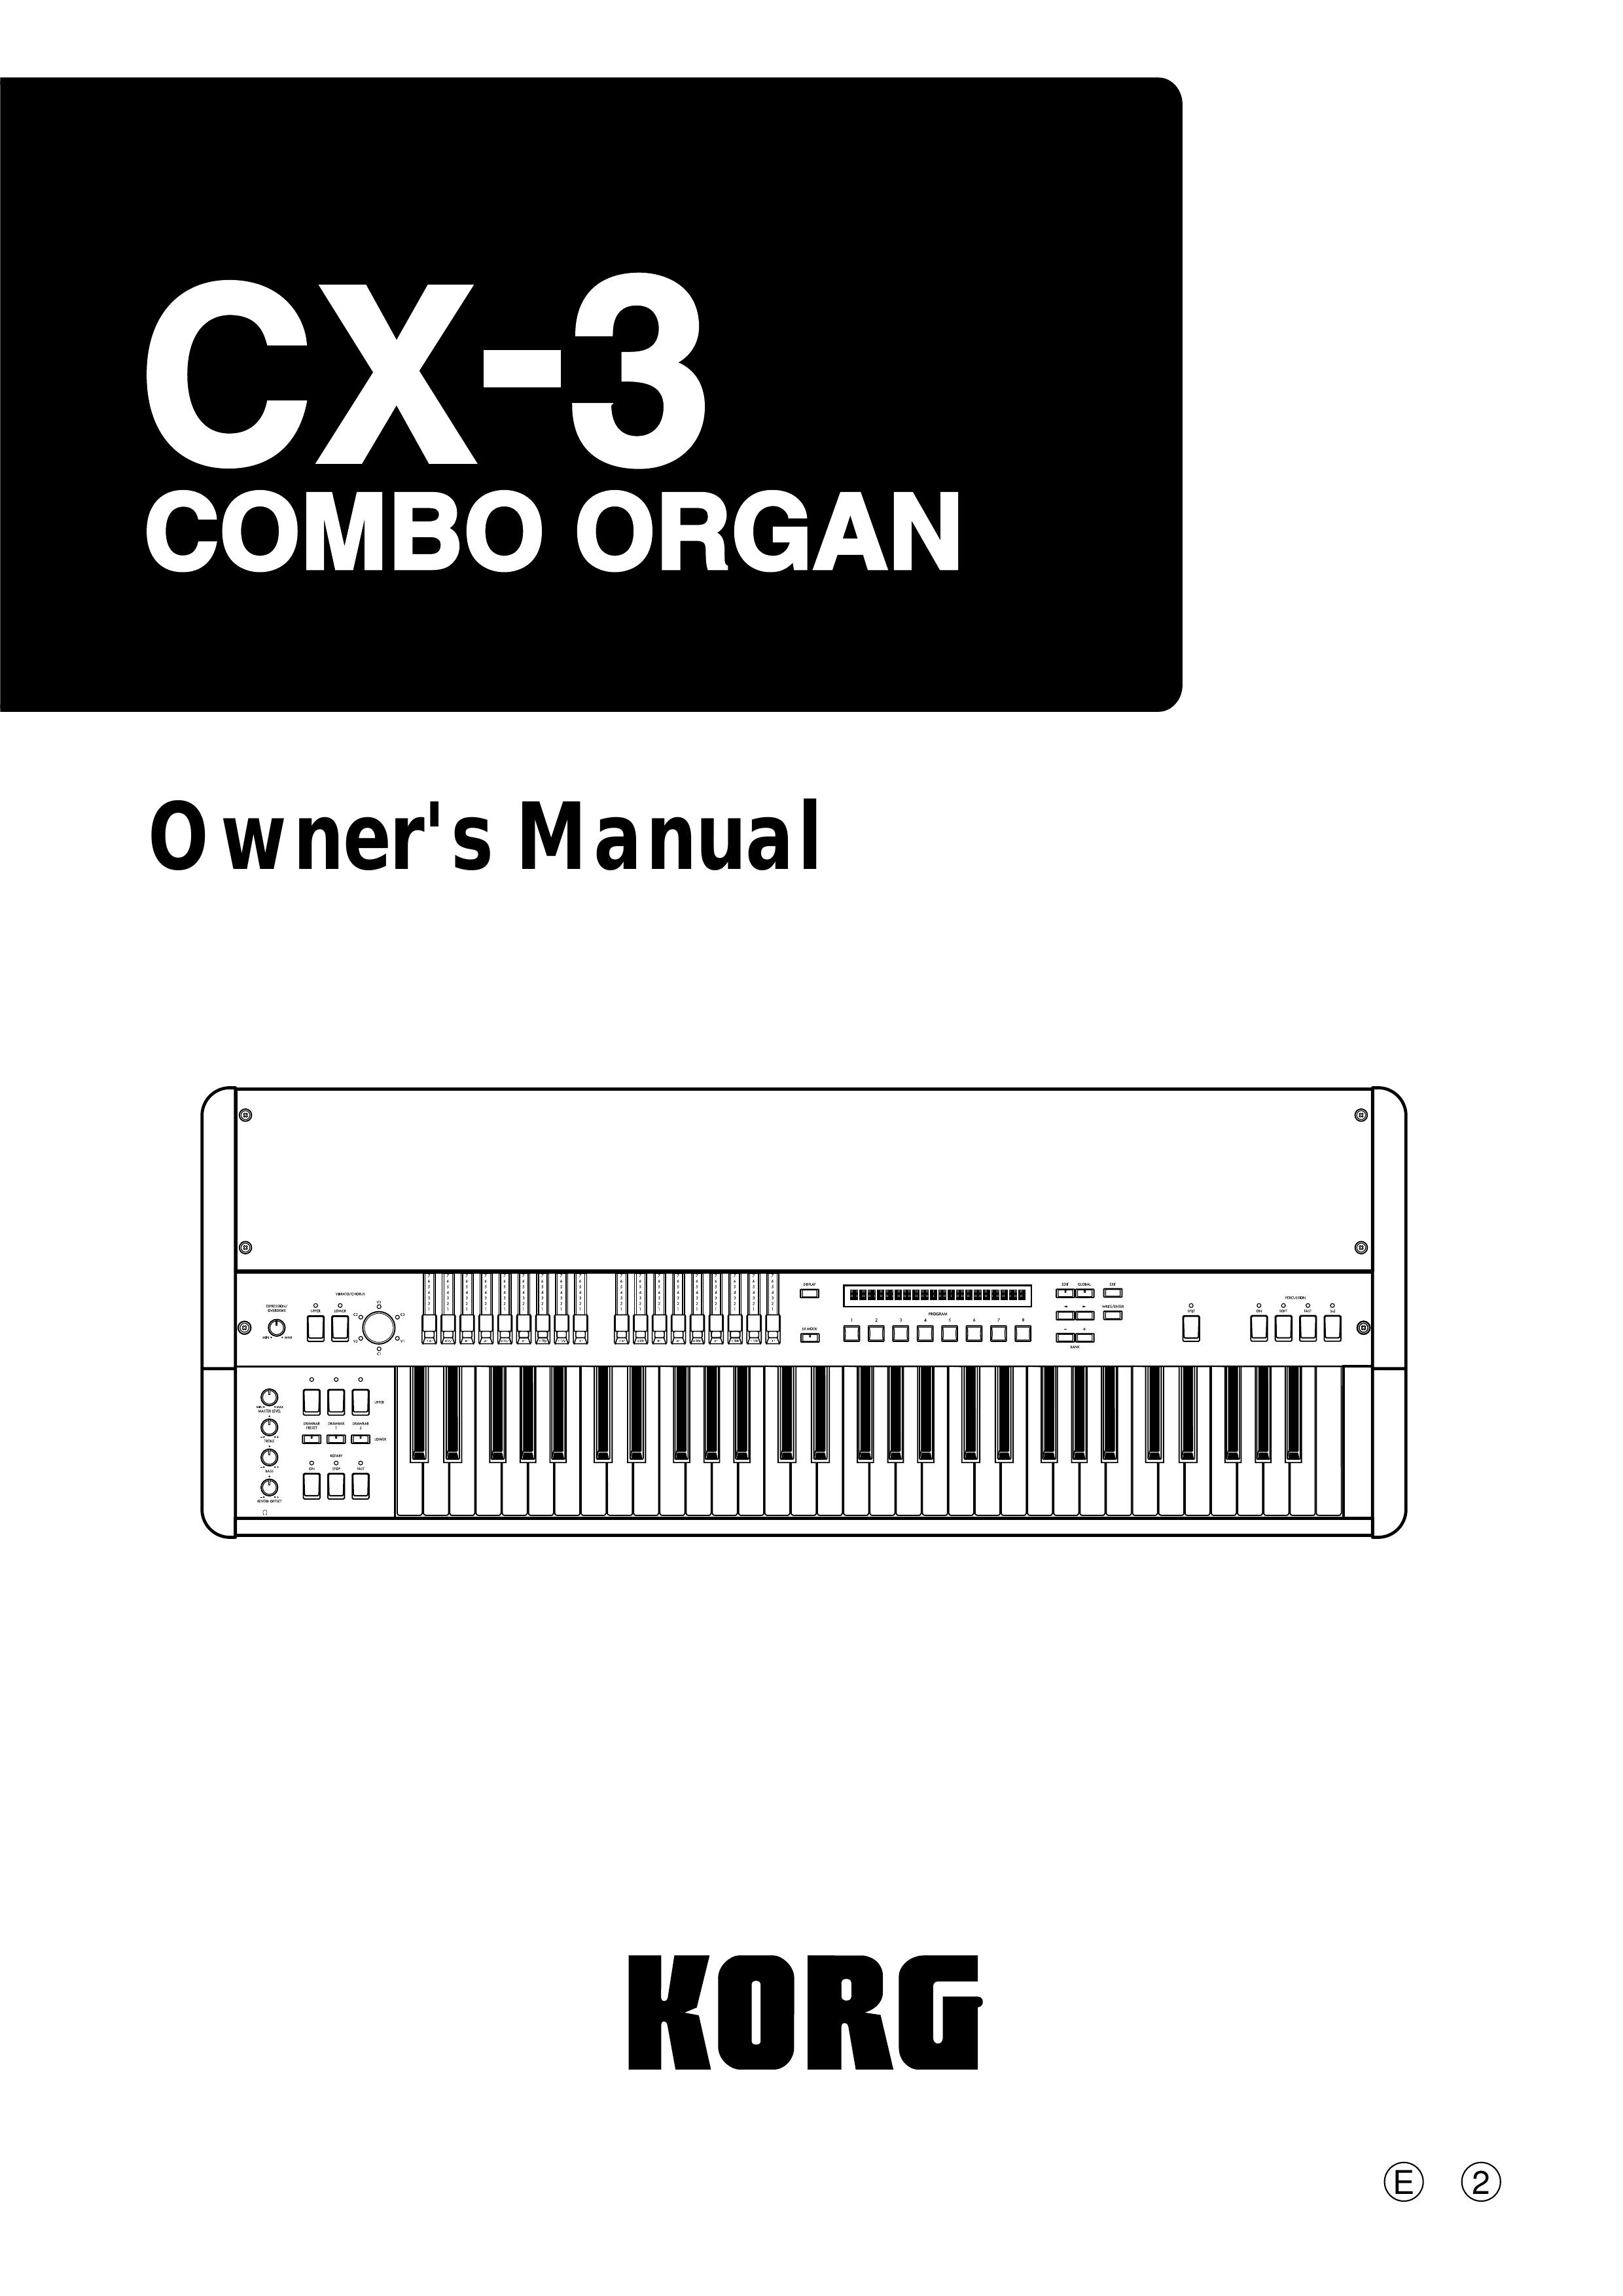 Korg CX-3 Musical Instrument User Manual